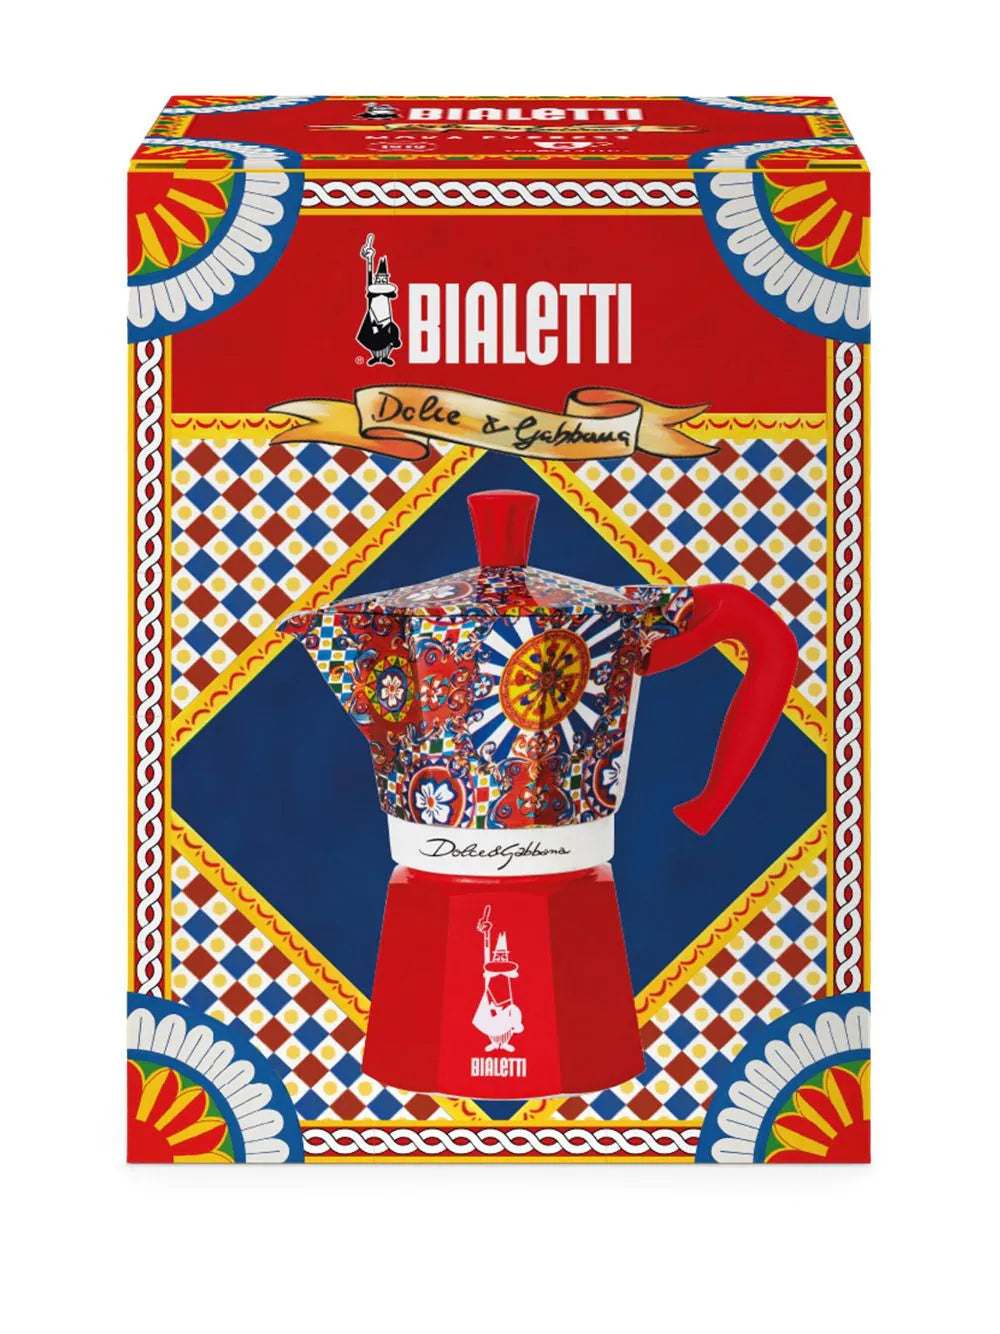 Bialetti Dolce & Gabbana - 3 cup